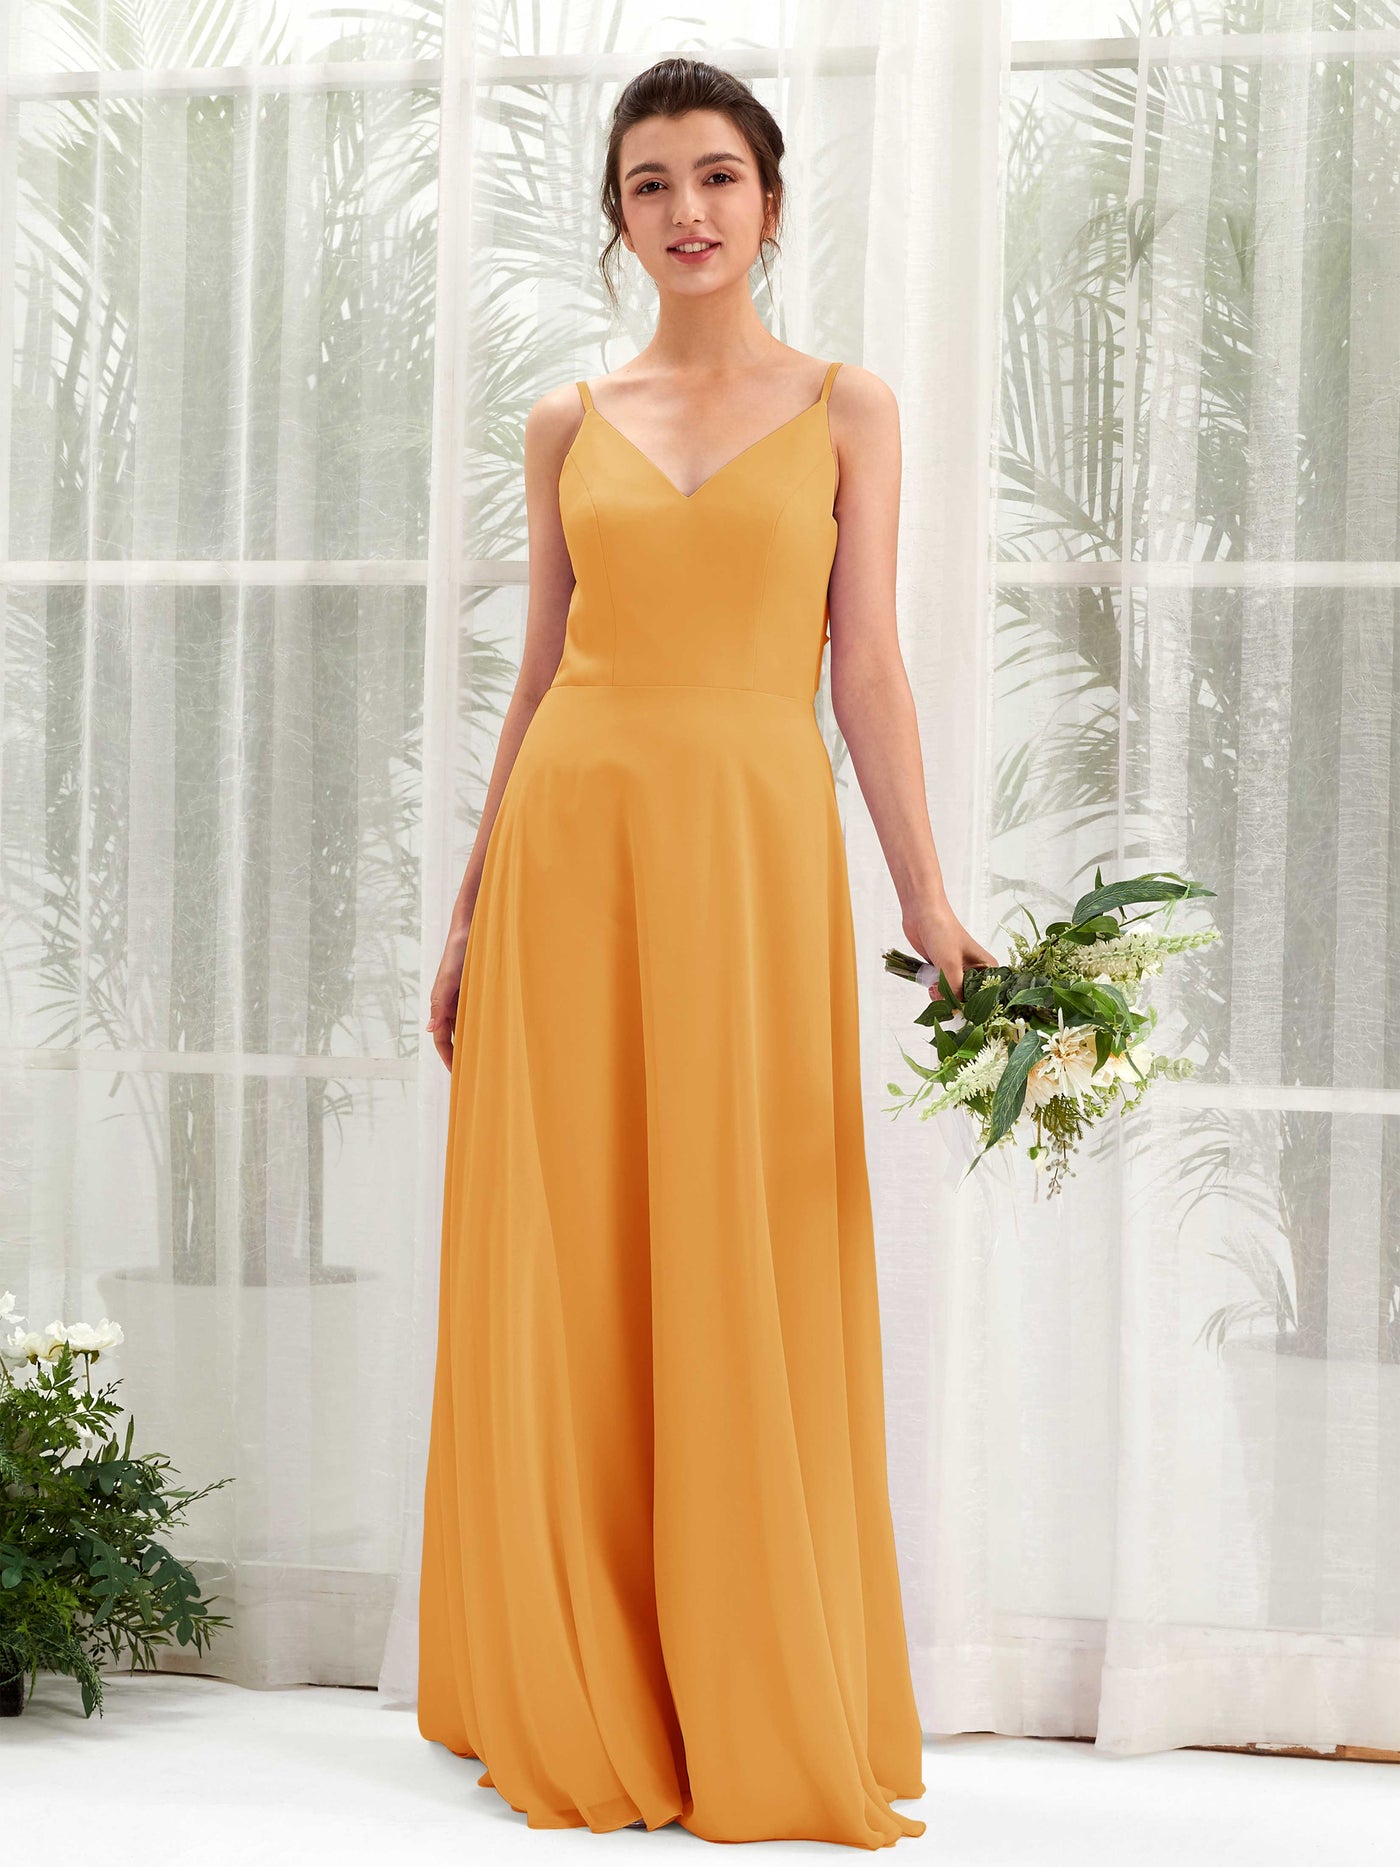 Mango Bridesmaid Dresses Bridesmaid Dress A-line Chiffon Spaghetti-straps Full Length Sleeveless Wedding Party Dress (81220602)#color_mango